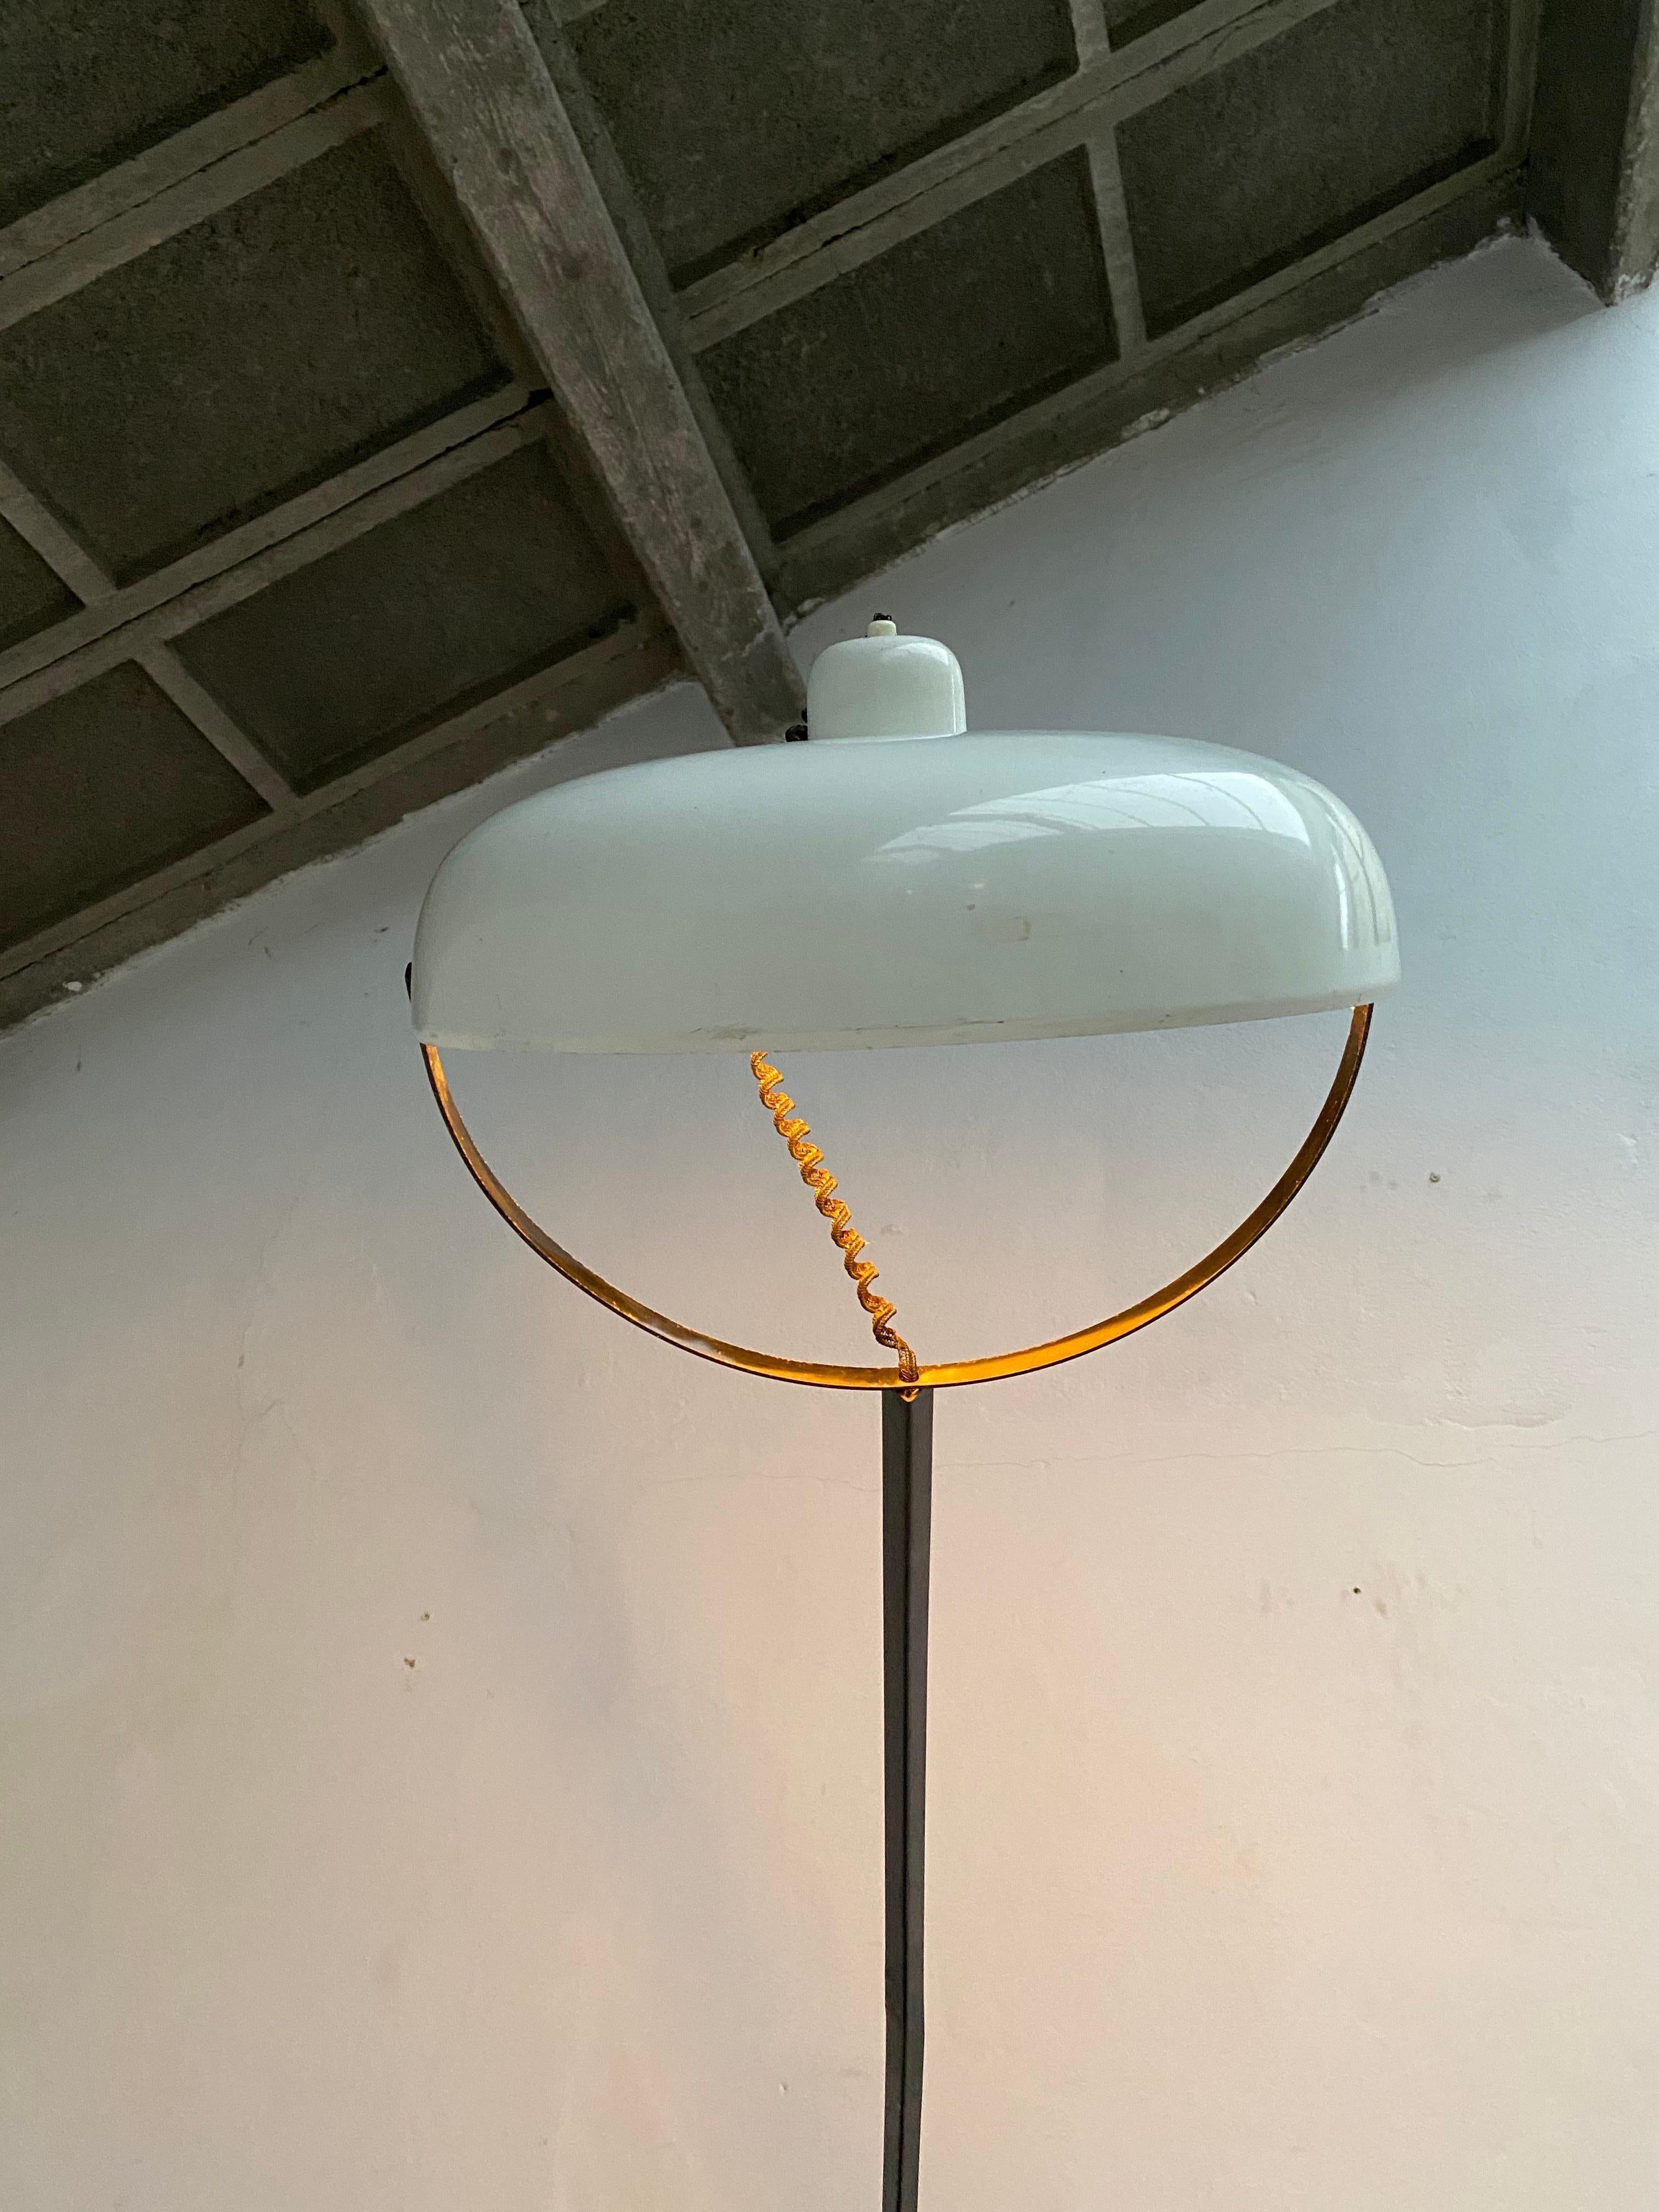 Minimalist Large Minimal Design Cantilevered Floorlamp by Reggiani Italy 1960s Original